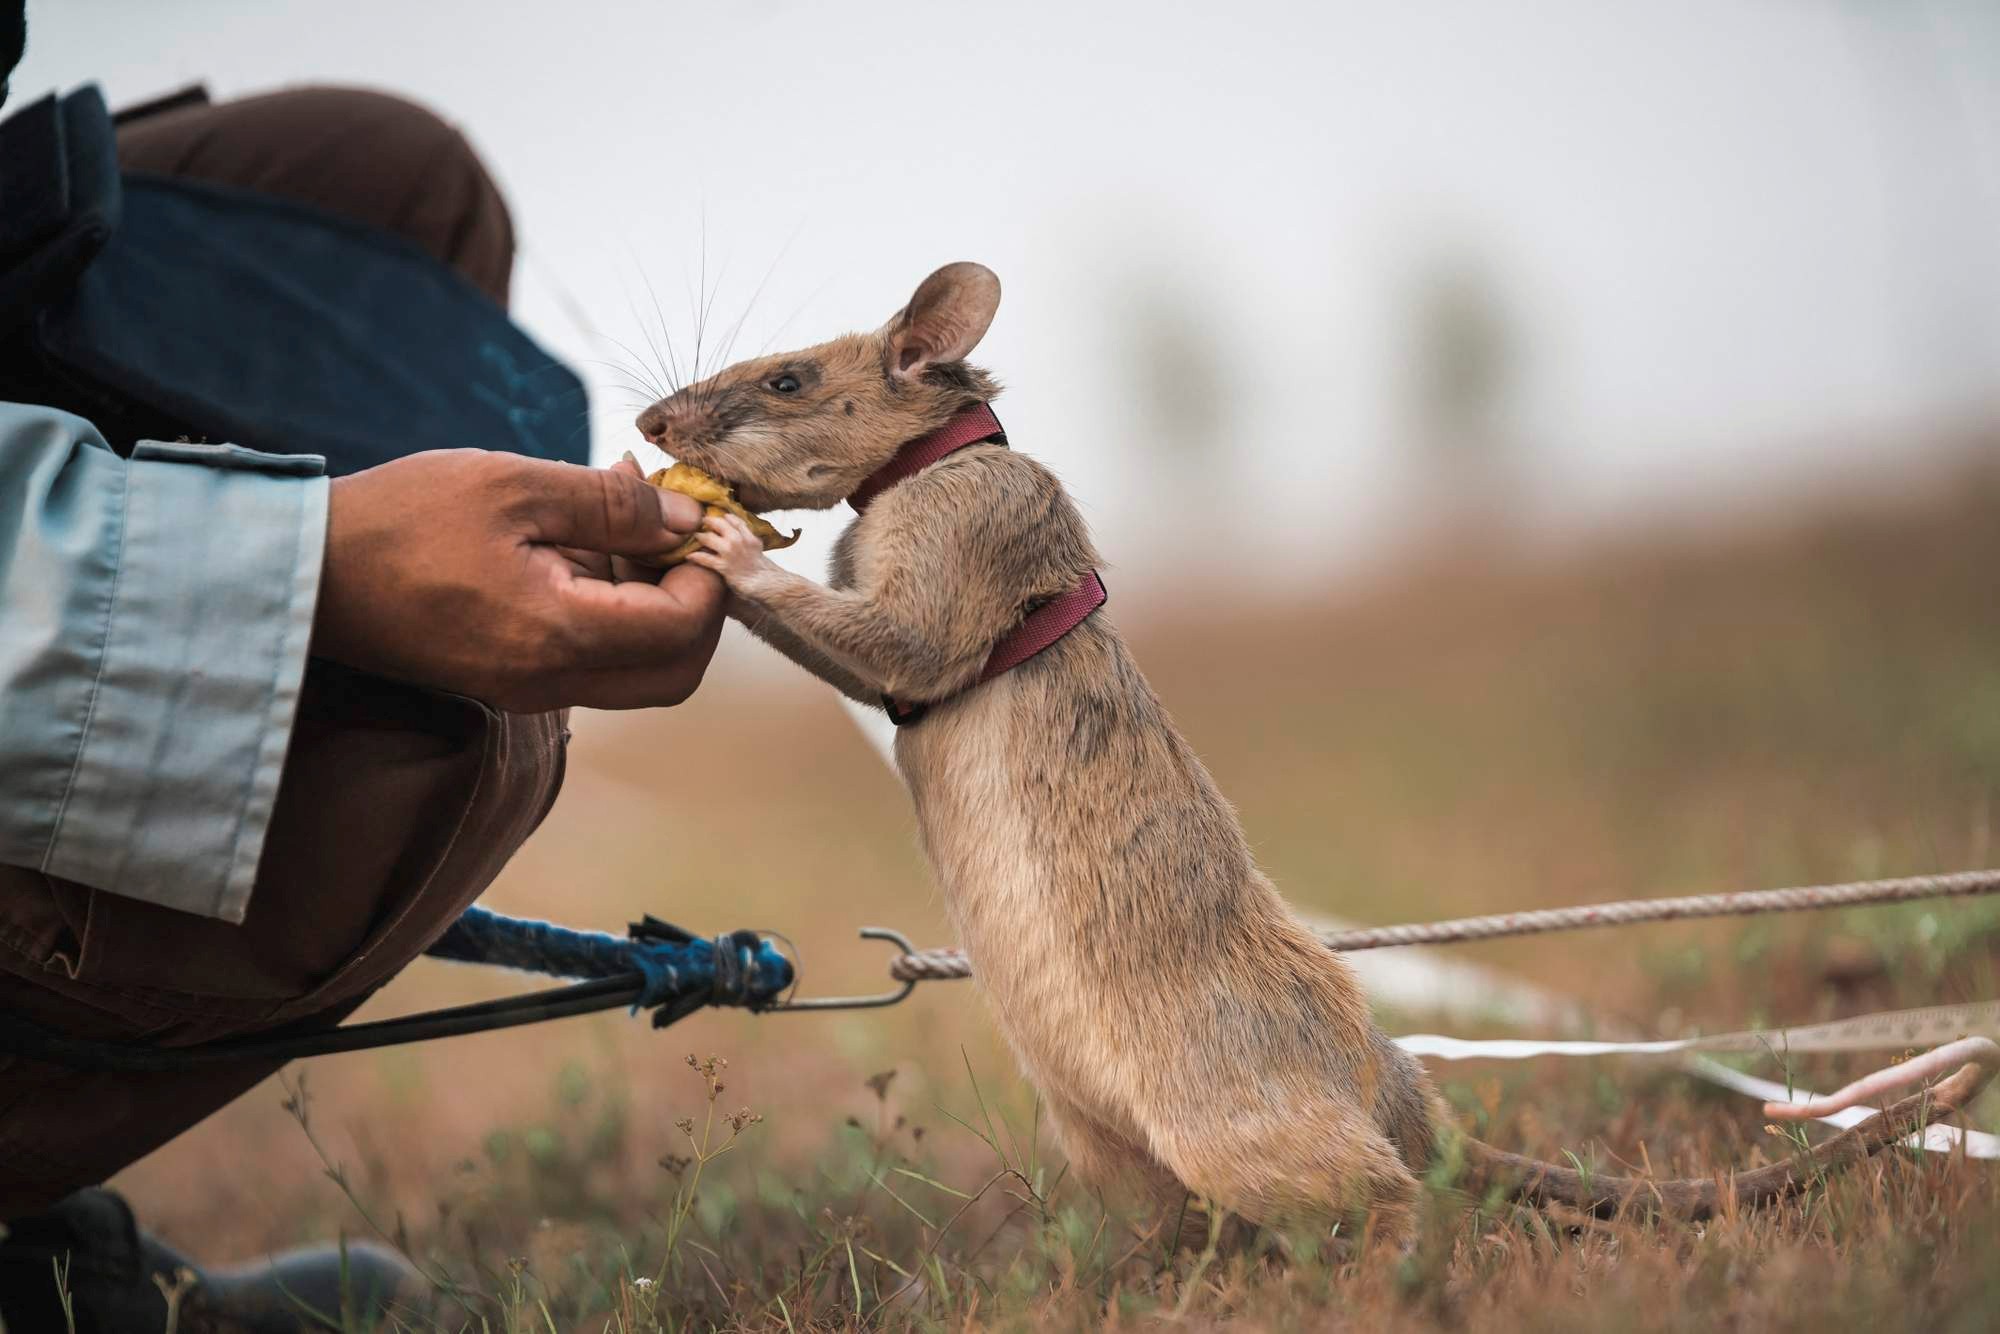 Magawa, rata gigante africana detectora de minas terrestres mortales, recibe medalla de oro